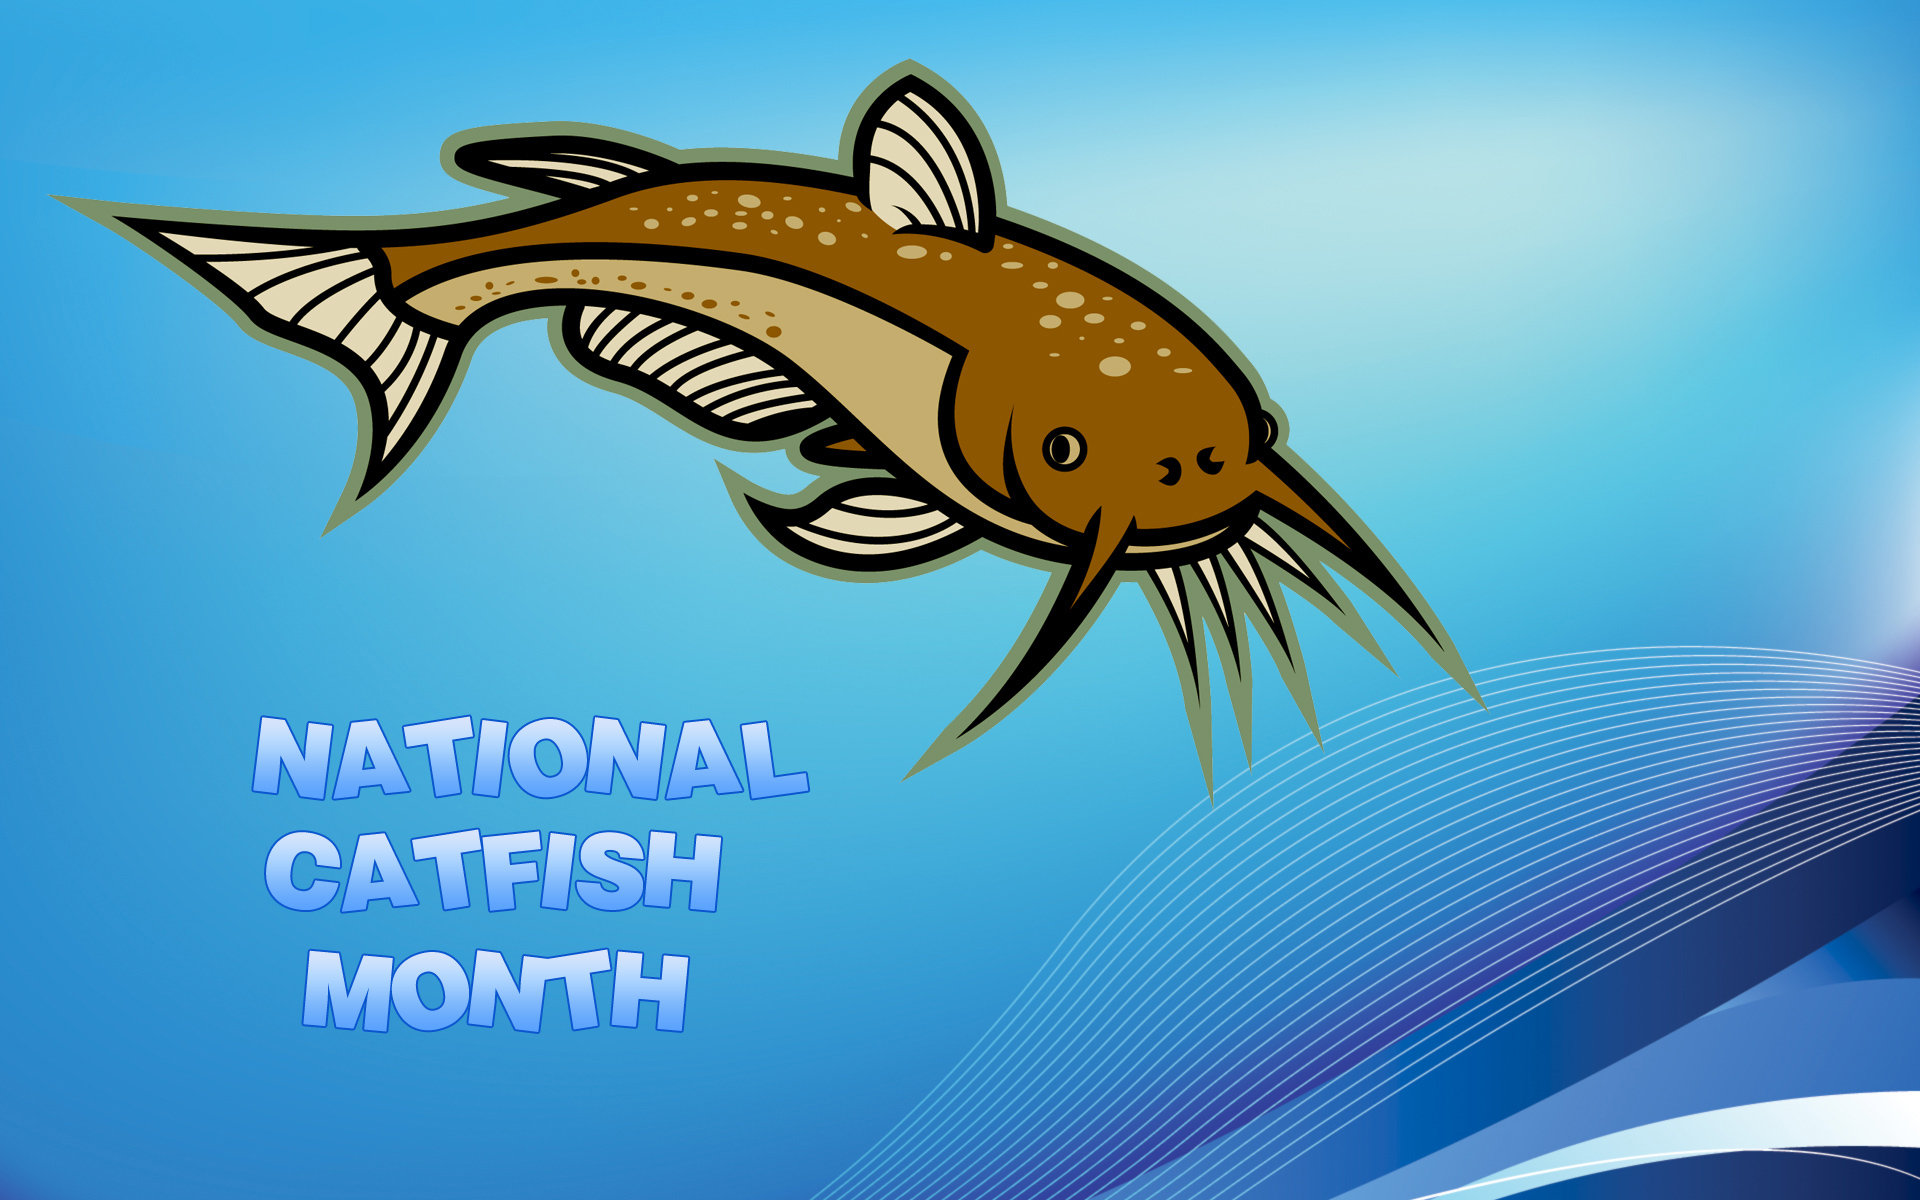 National Catfish Month Puter Desktop Wallpaper Pictures